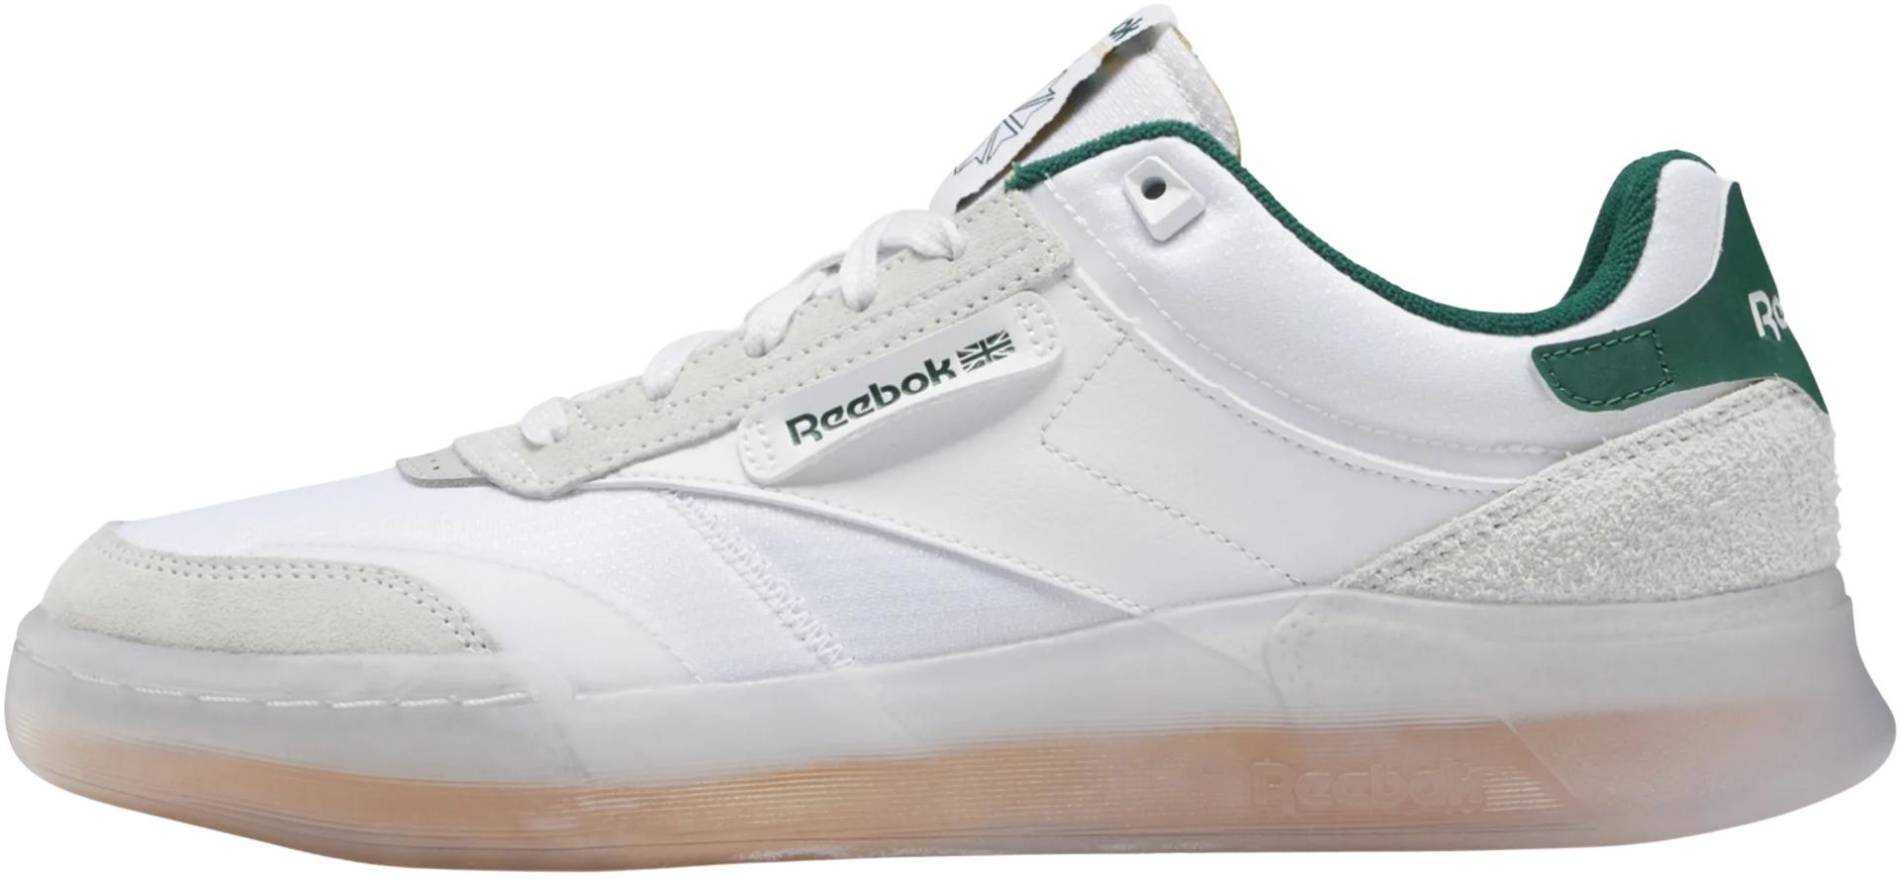 Retro Style with a Twist: Reebok Club C Legacy Sneakers